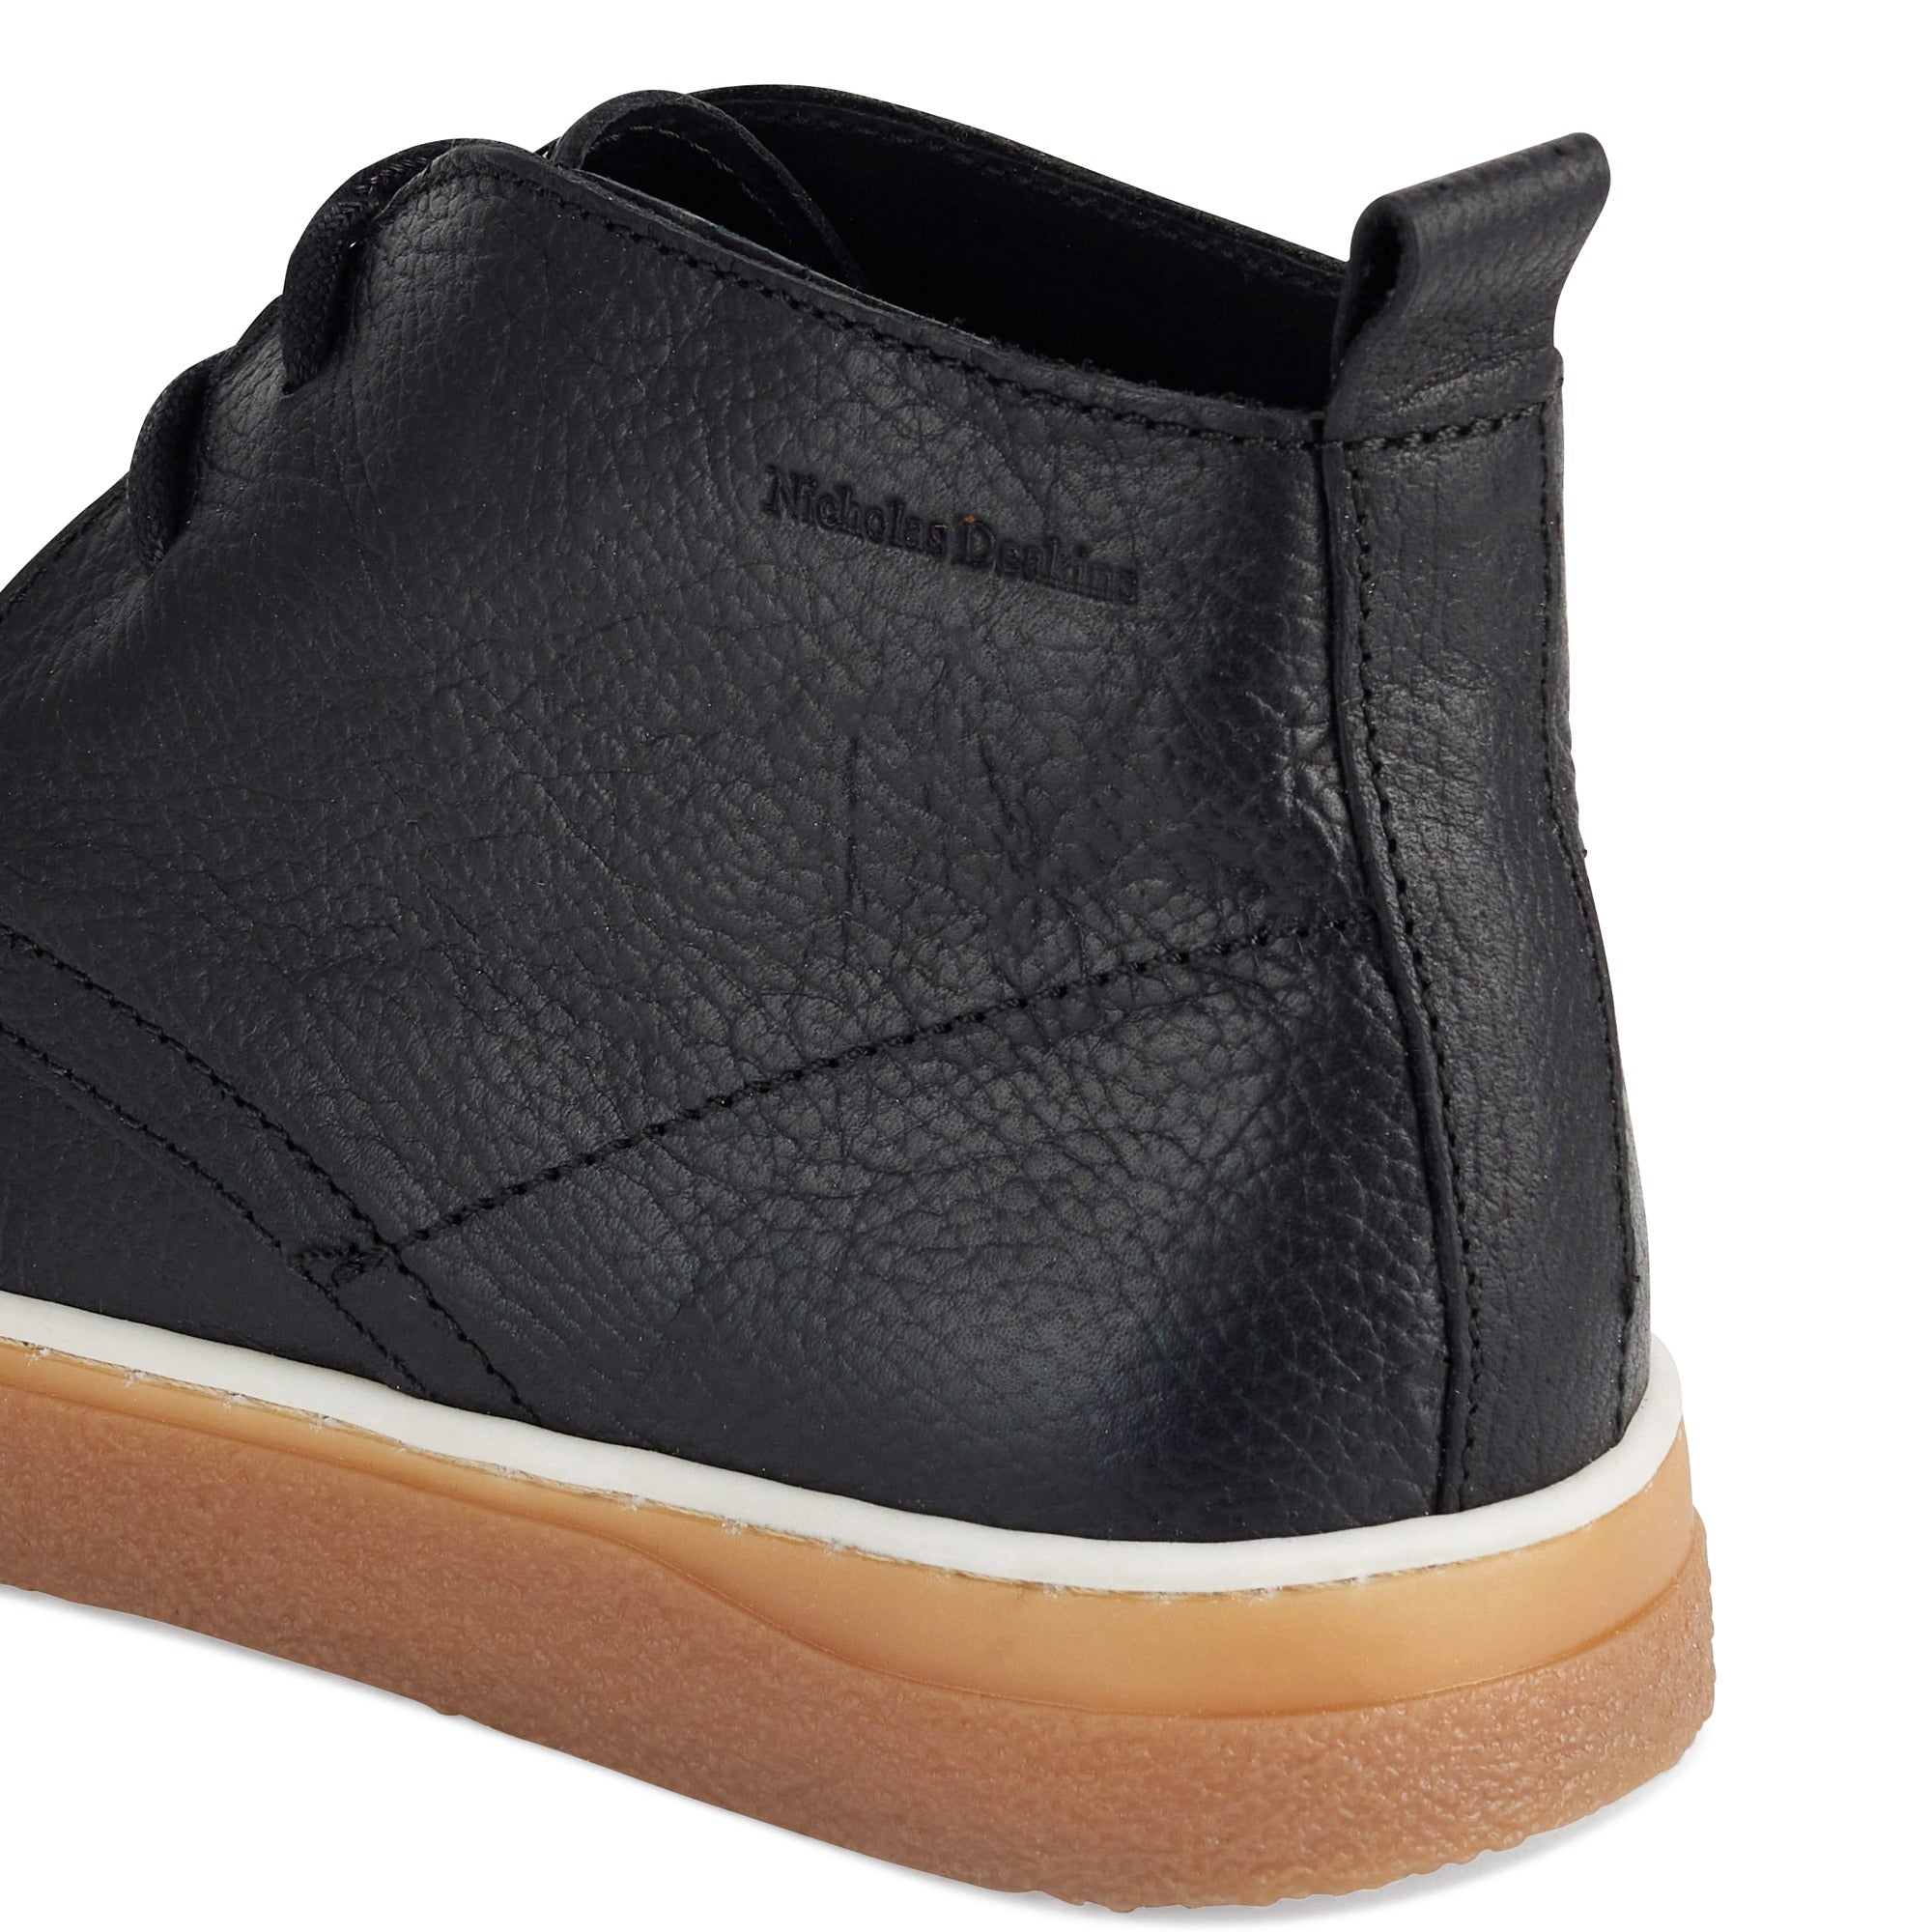 Nicholas Deakins Botin Boots Black Leather